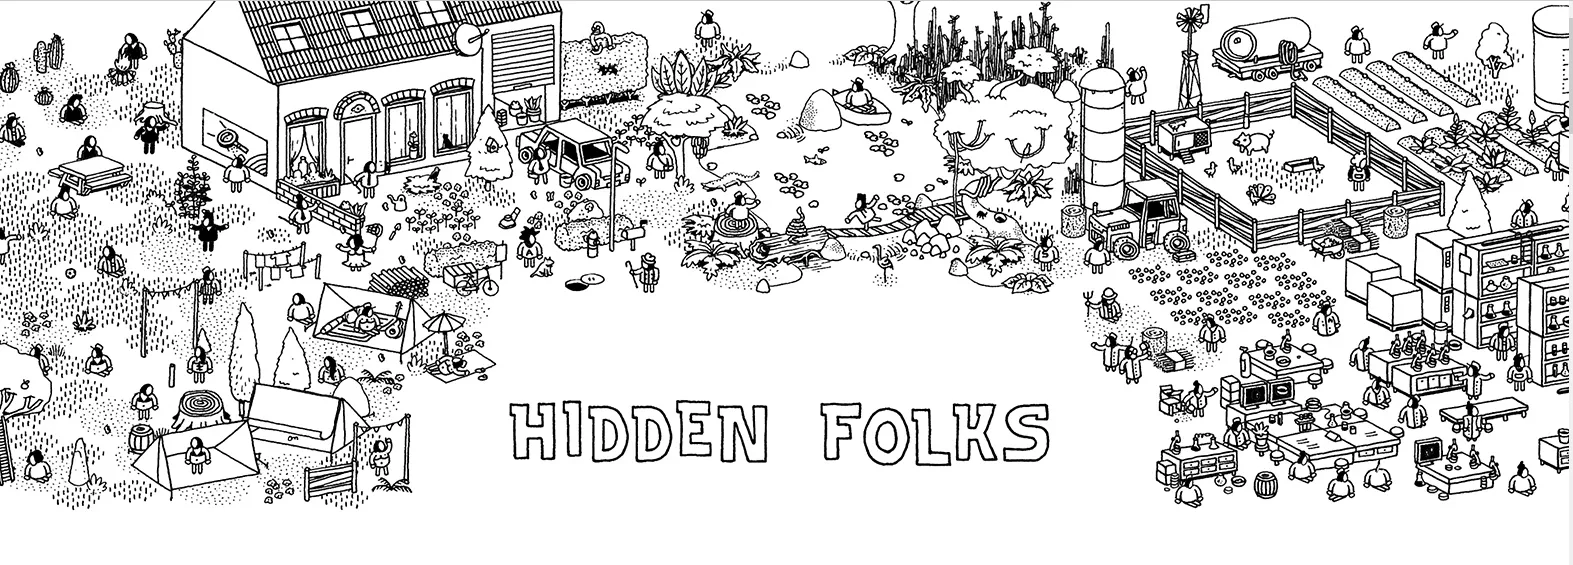 hidden folksf1711637126